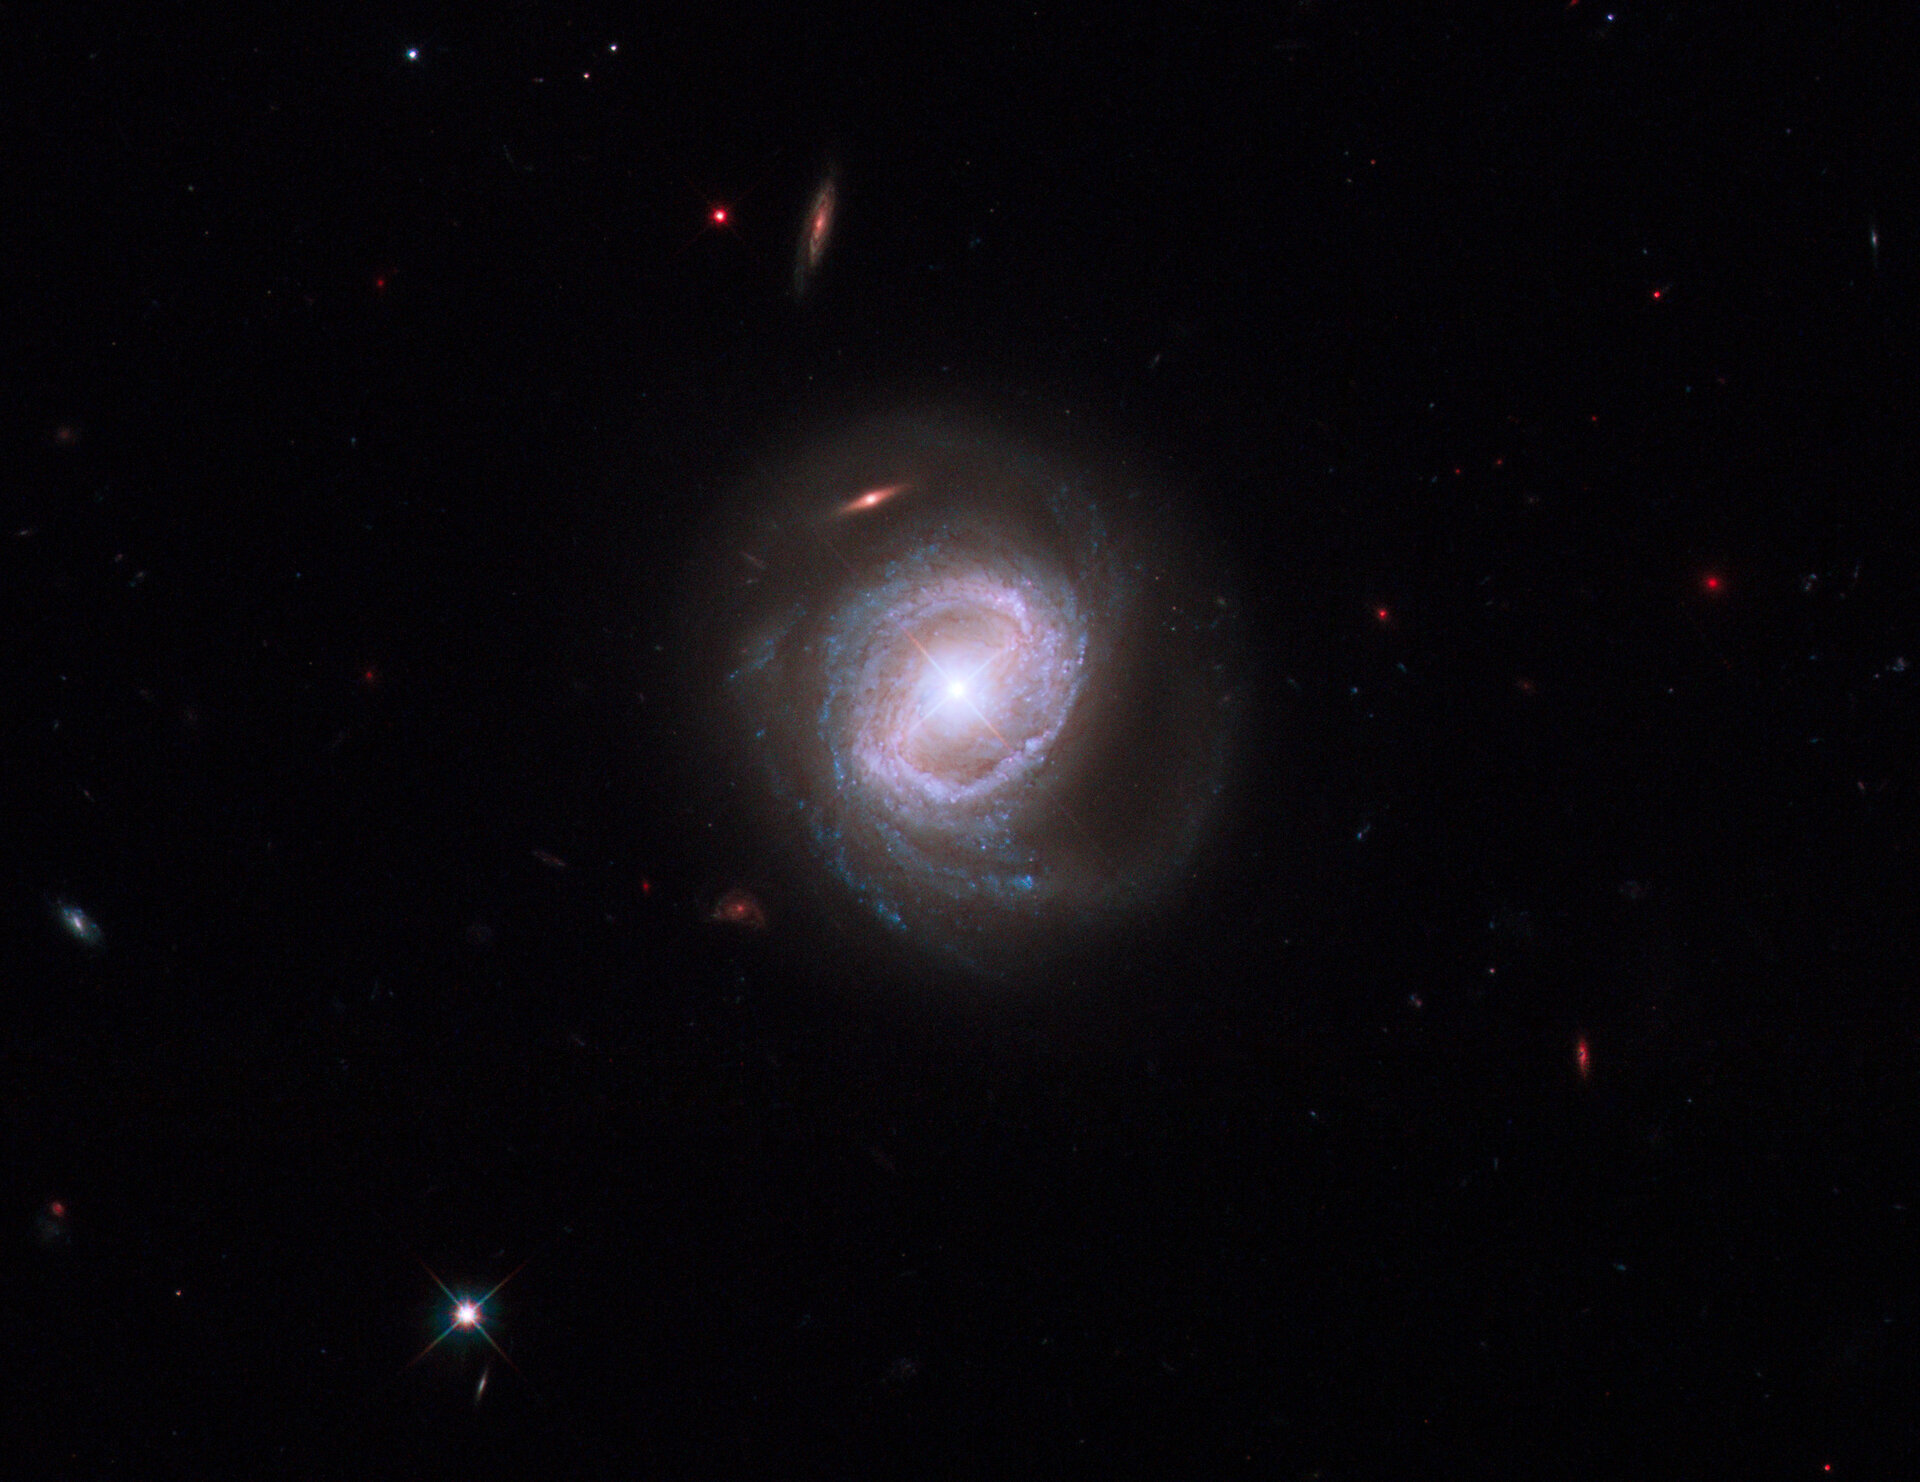 Markarian 187 as seen by Hubble